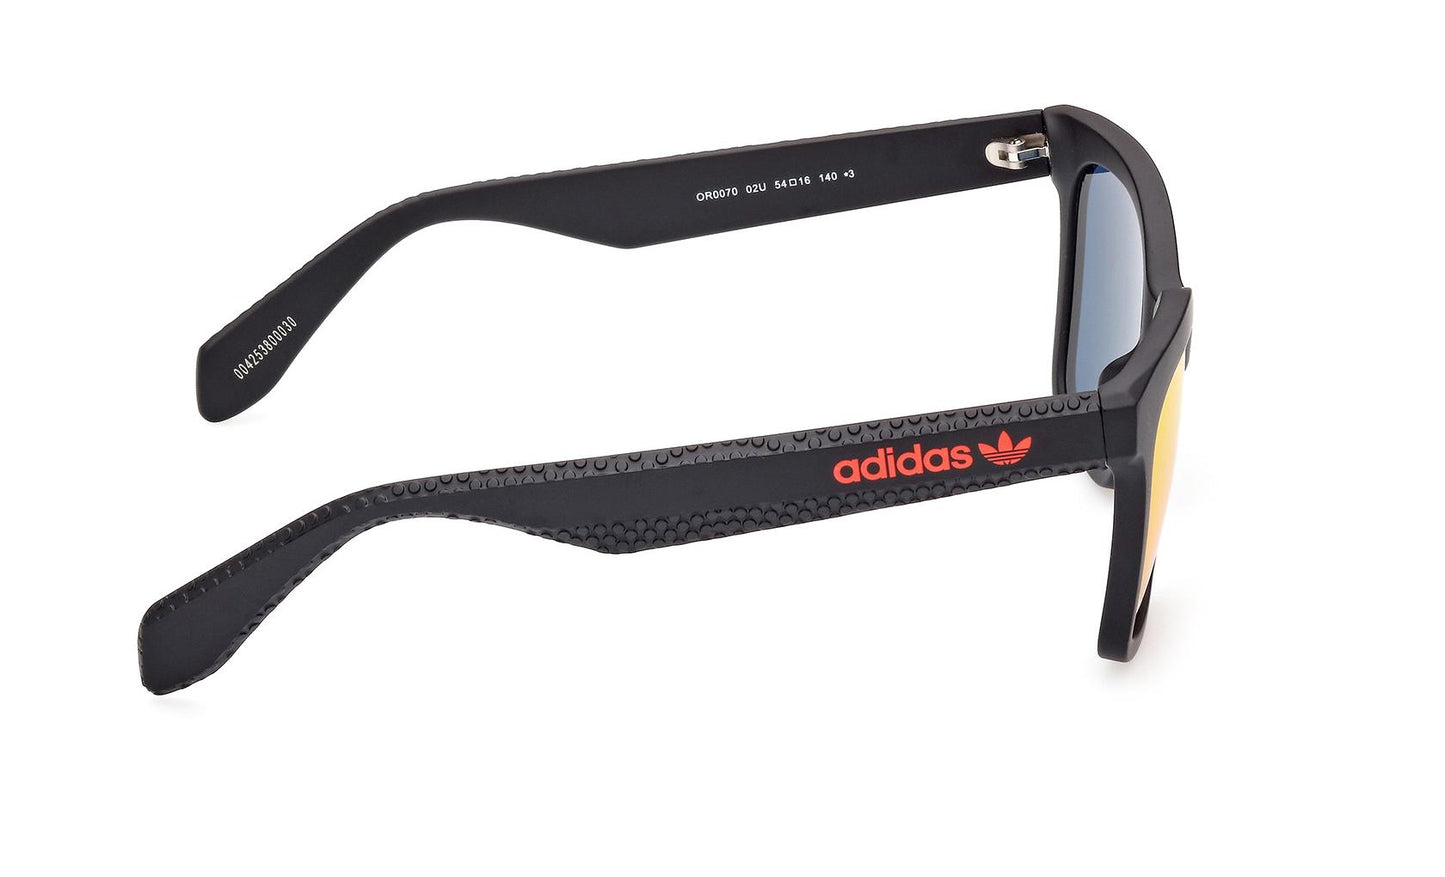 Adidas Originals Sunglasses OR0070 02U